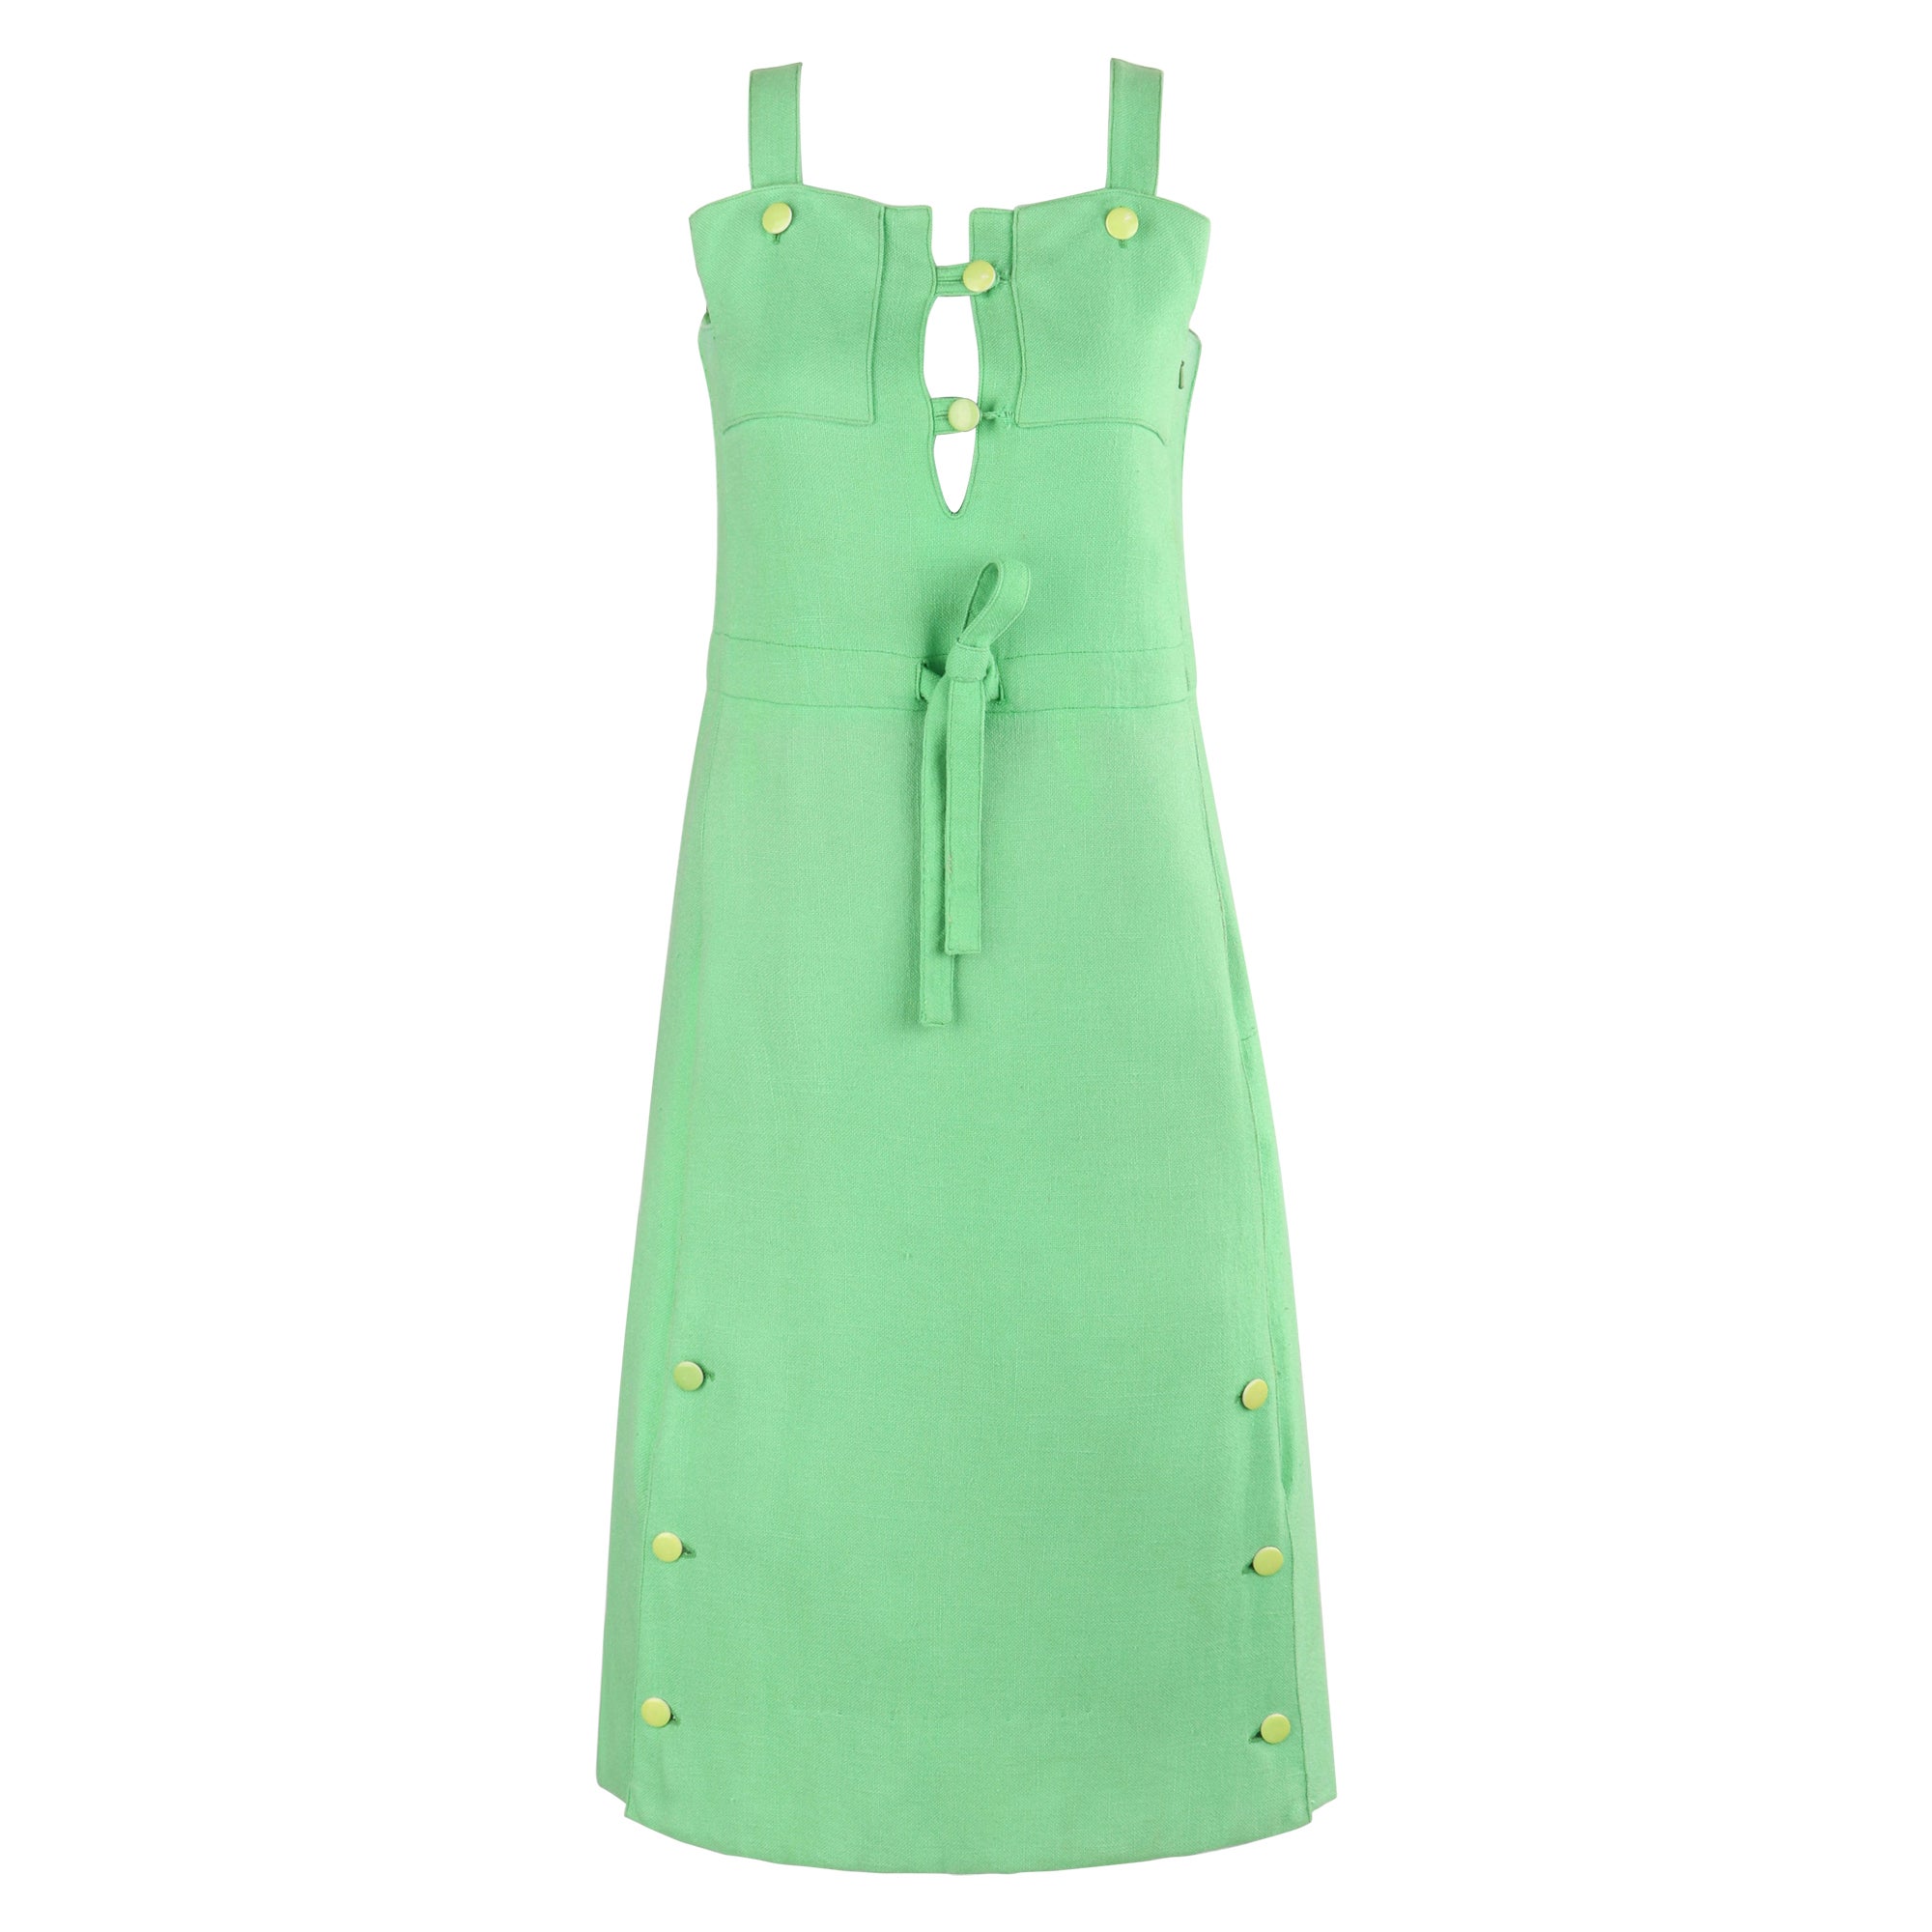 COURREGES Paris c.1960's Vtg Mint Green Tie Front Overall Midi Day Dress For Sale